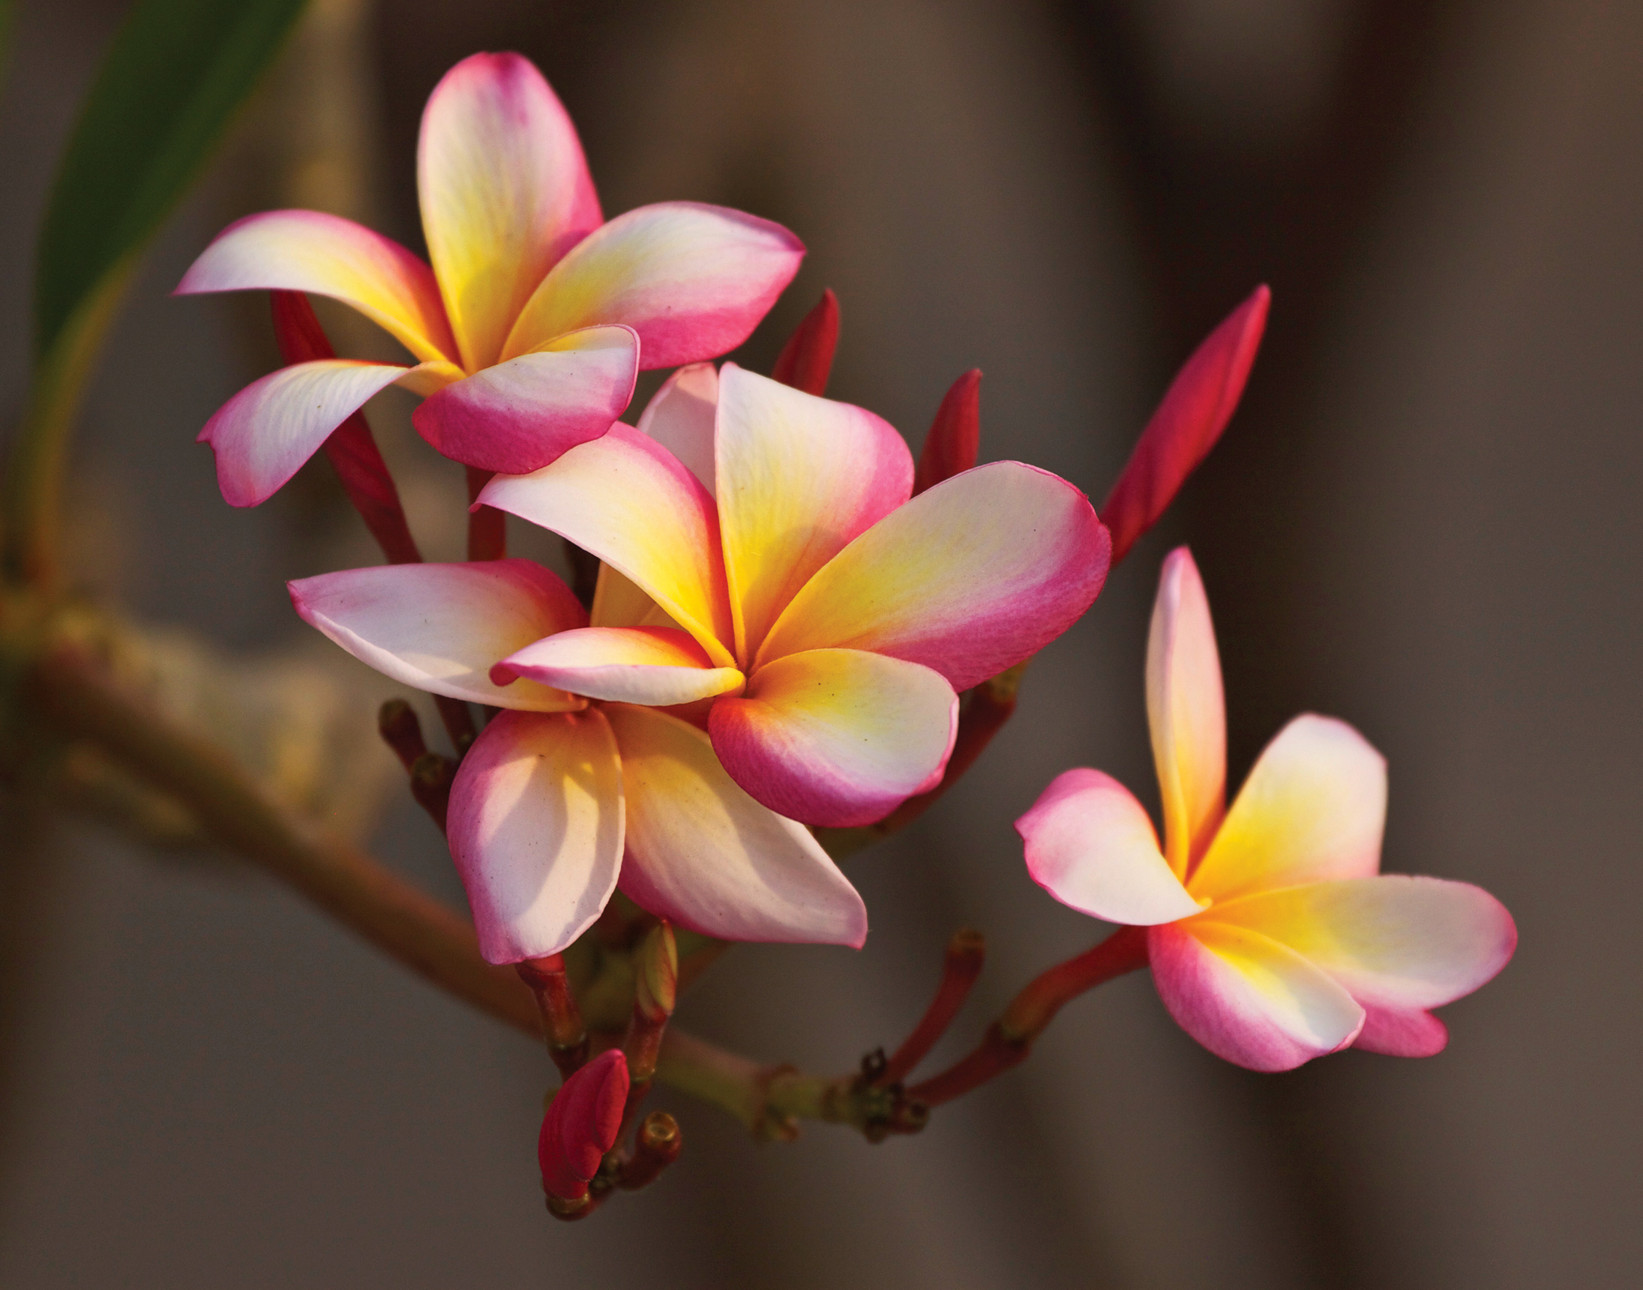 165825 descargar imagen tierra/naturaleza, frangipani, flores: fondos de pantalla y protectores de pantalla gratis